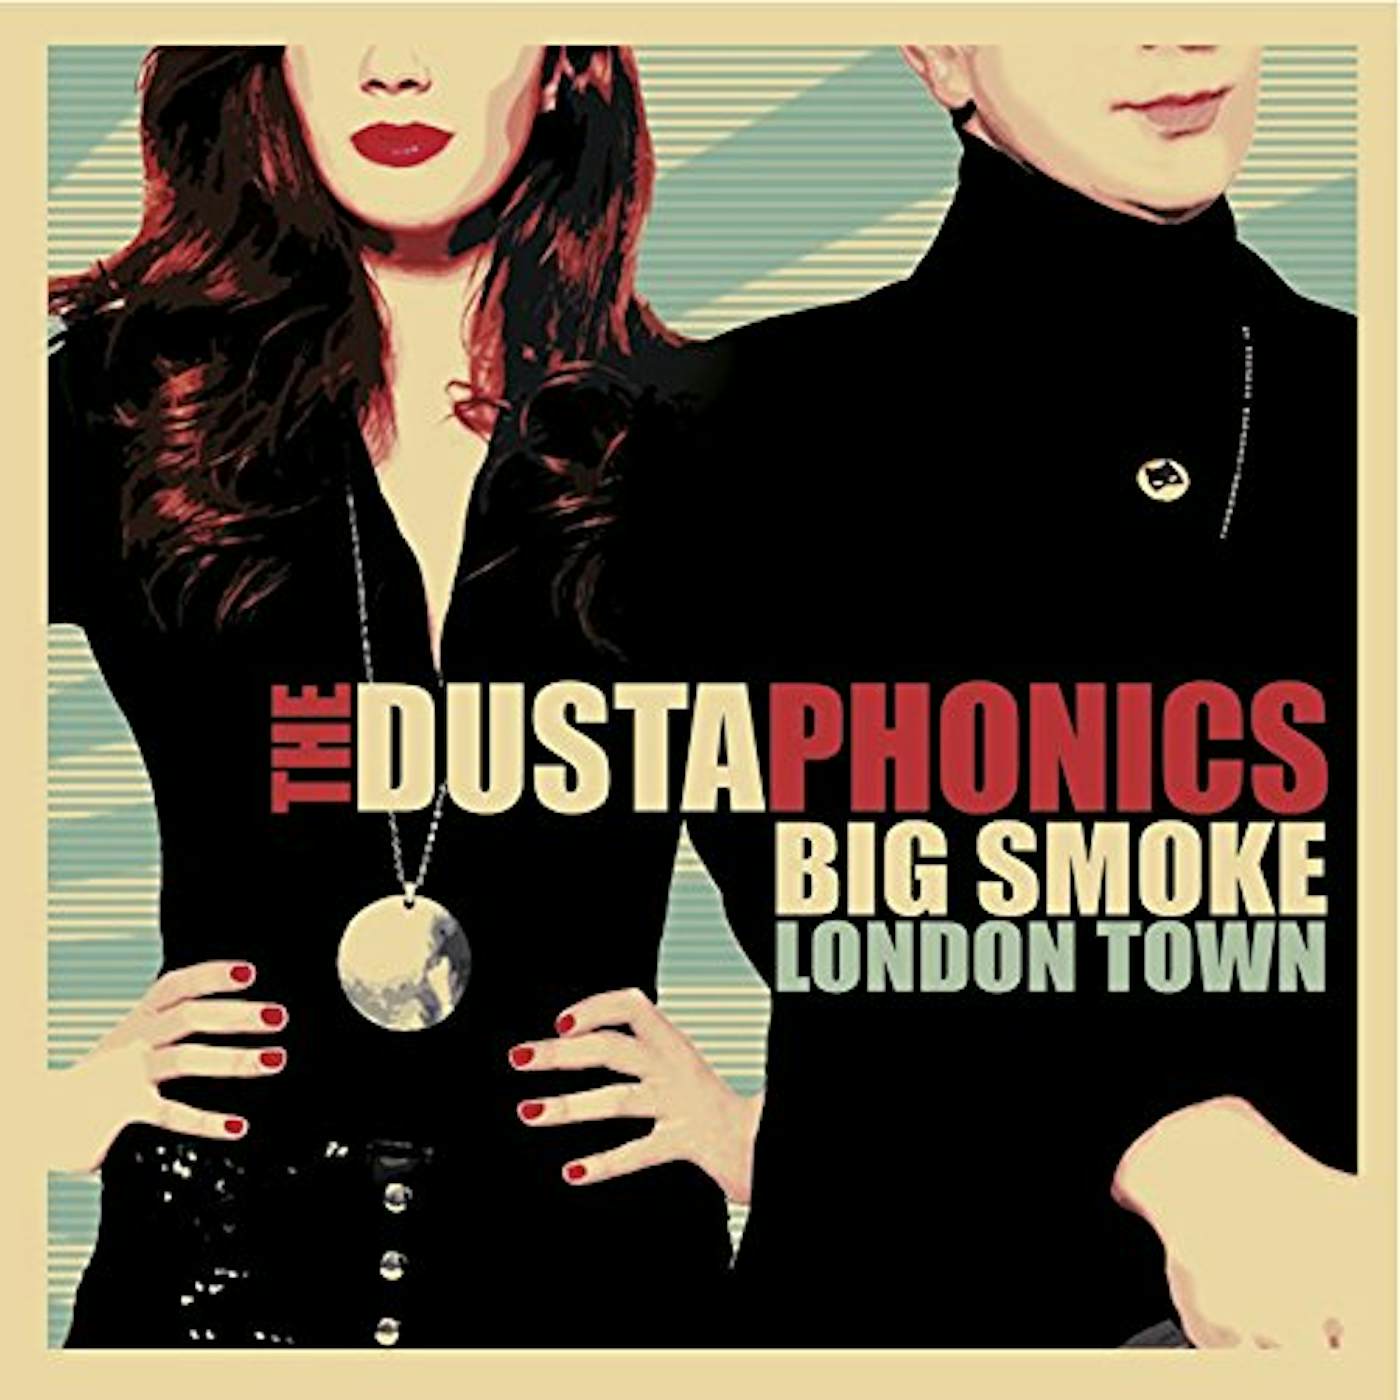 The Dustaphonics BIG SMOKE LONDON TOWN CD